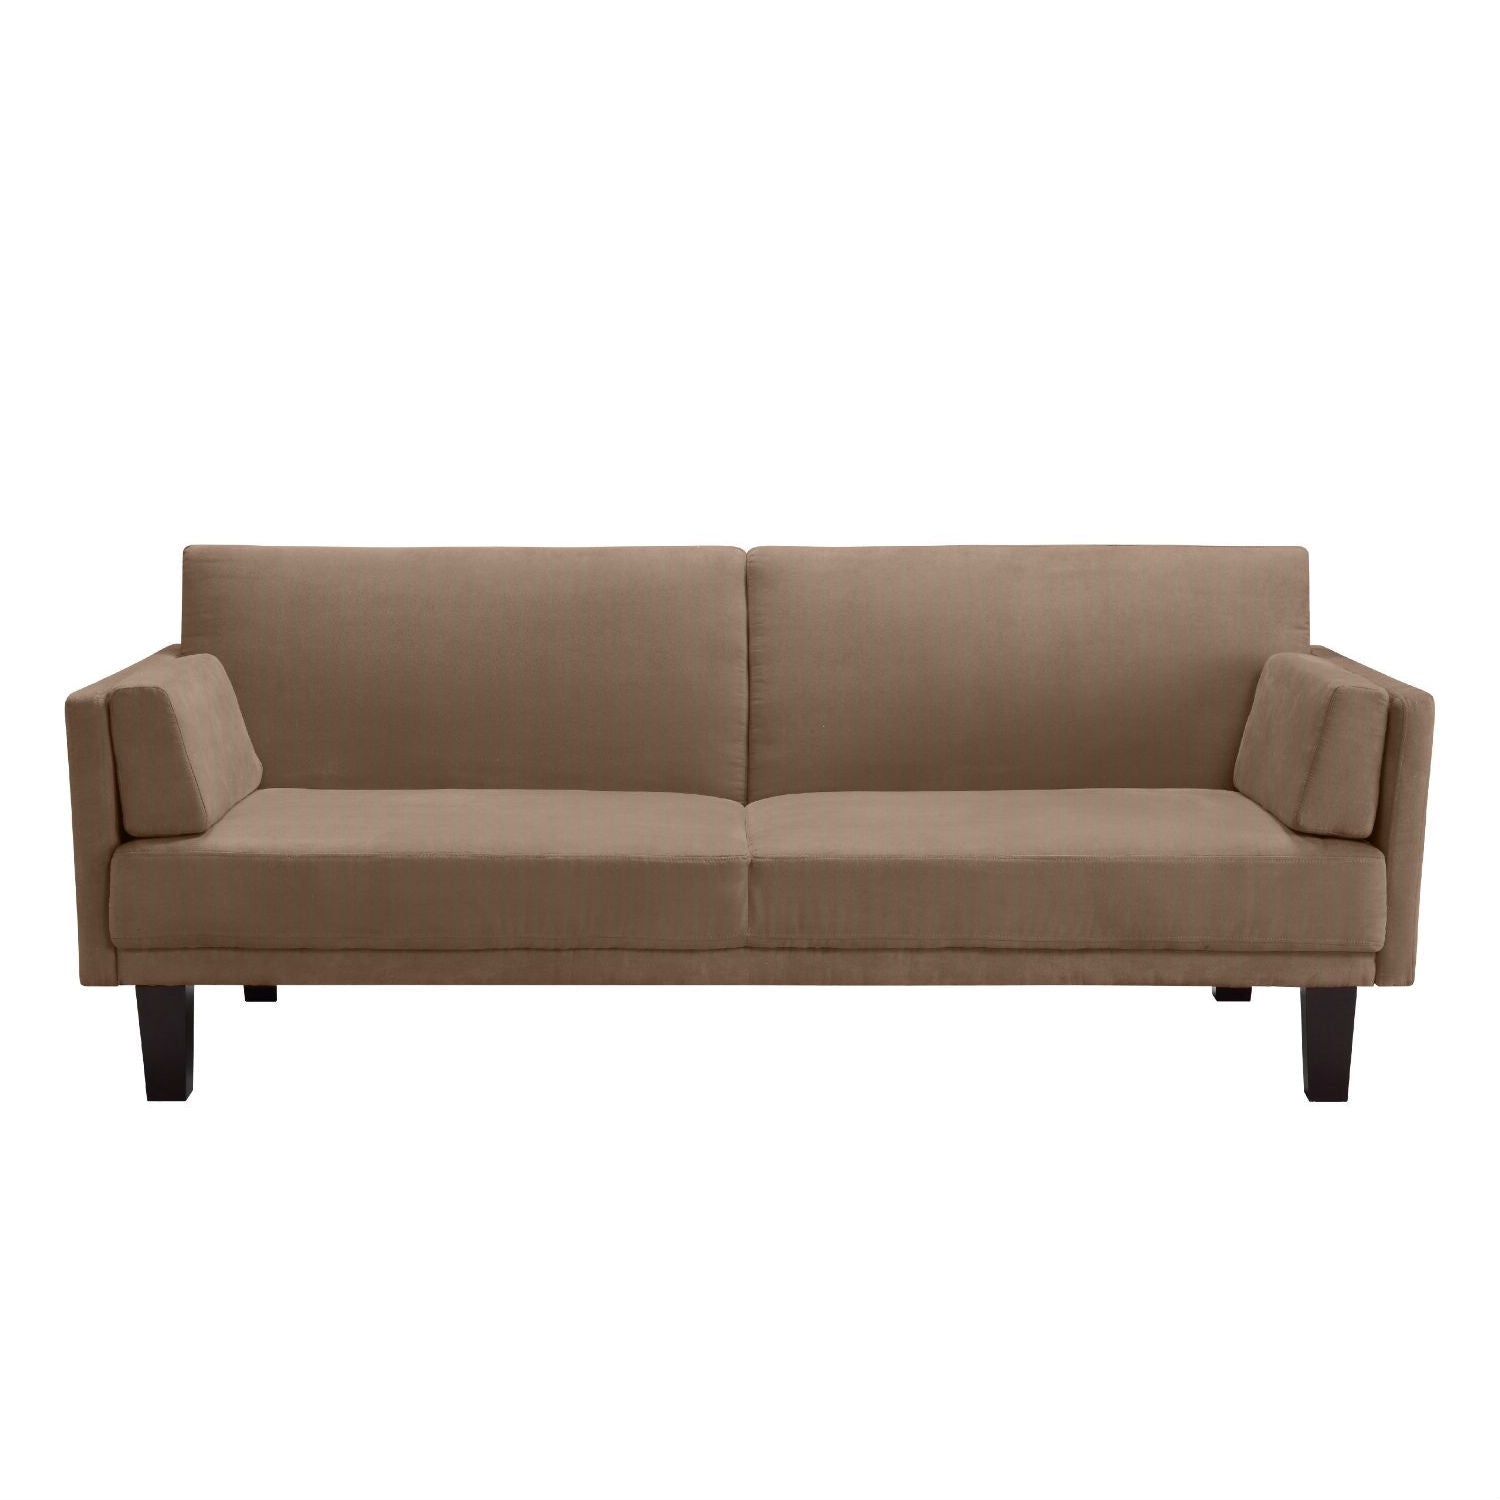 Living Room > Sofas - Modern Tan Microfiber Upholstered Futon Style Sleeper Sofa Bed